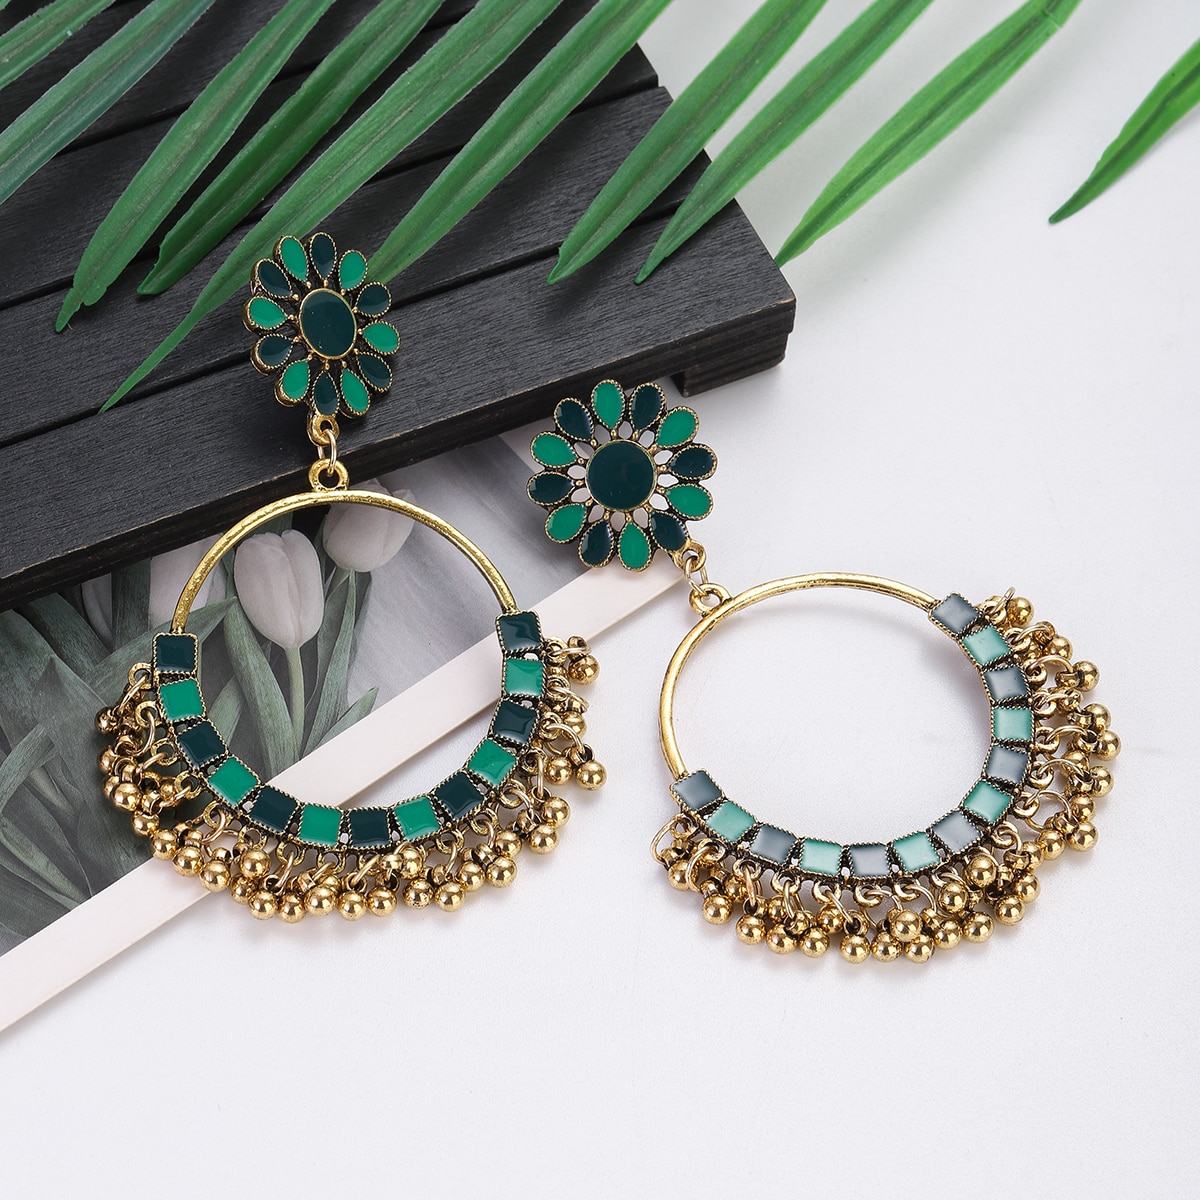 Ethnic-Vintage-Big-Round-Dangle-Earrings-for-Women-Boho-Green-Flower-Beads-Tassel-Earrings-Party-Jew-1005005057264367-8